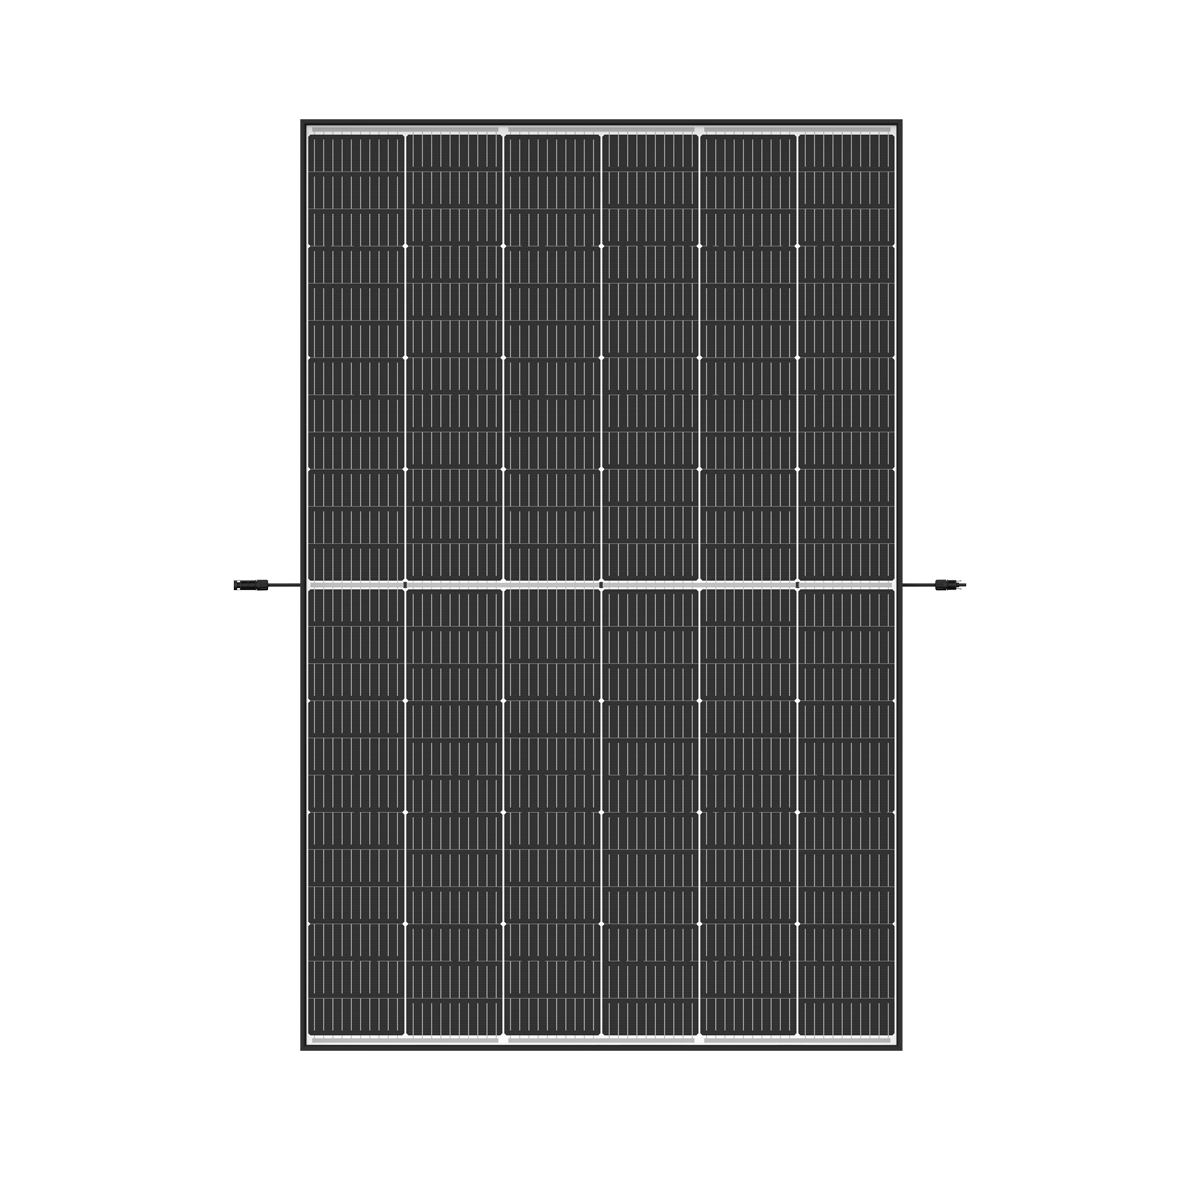 435W Trina Vertex S+ glass glass solar module BLACK FRAME